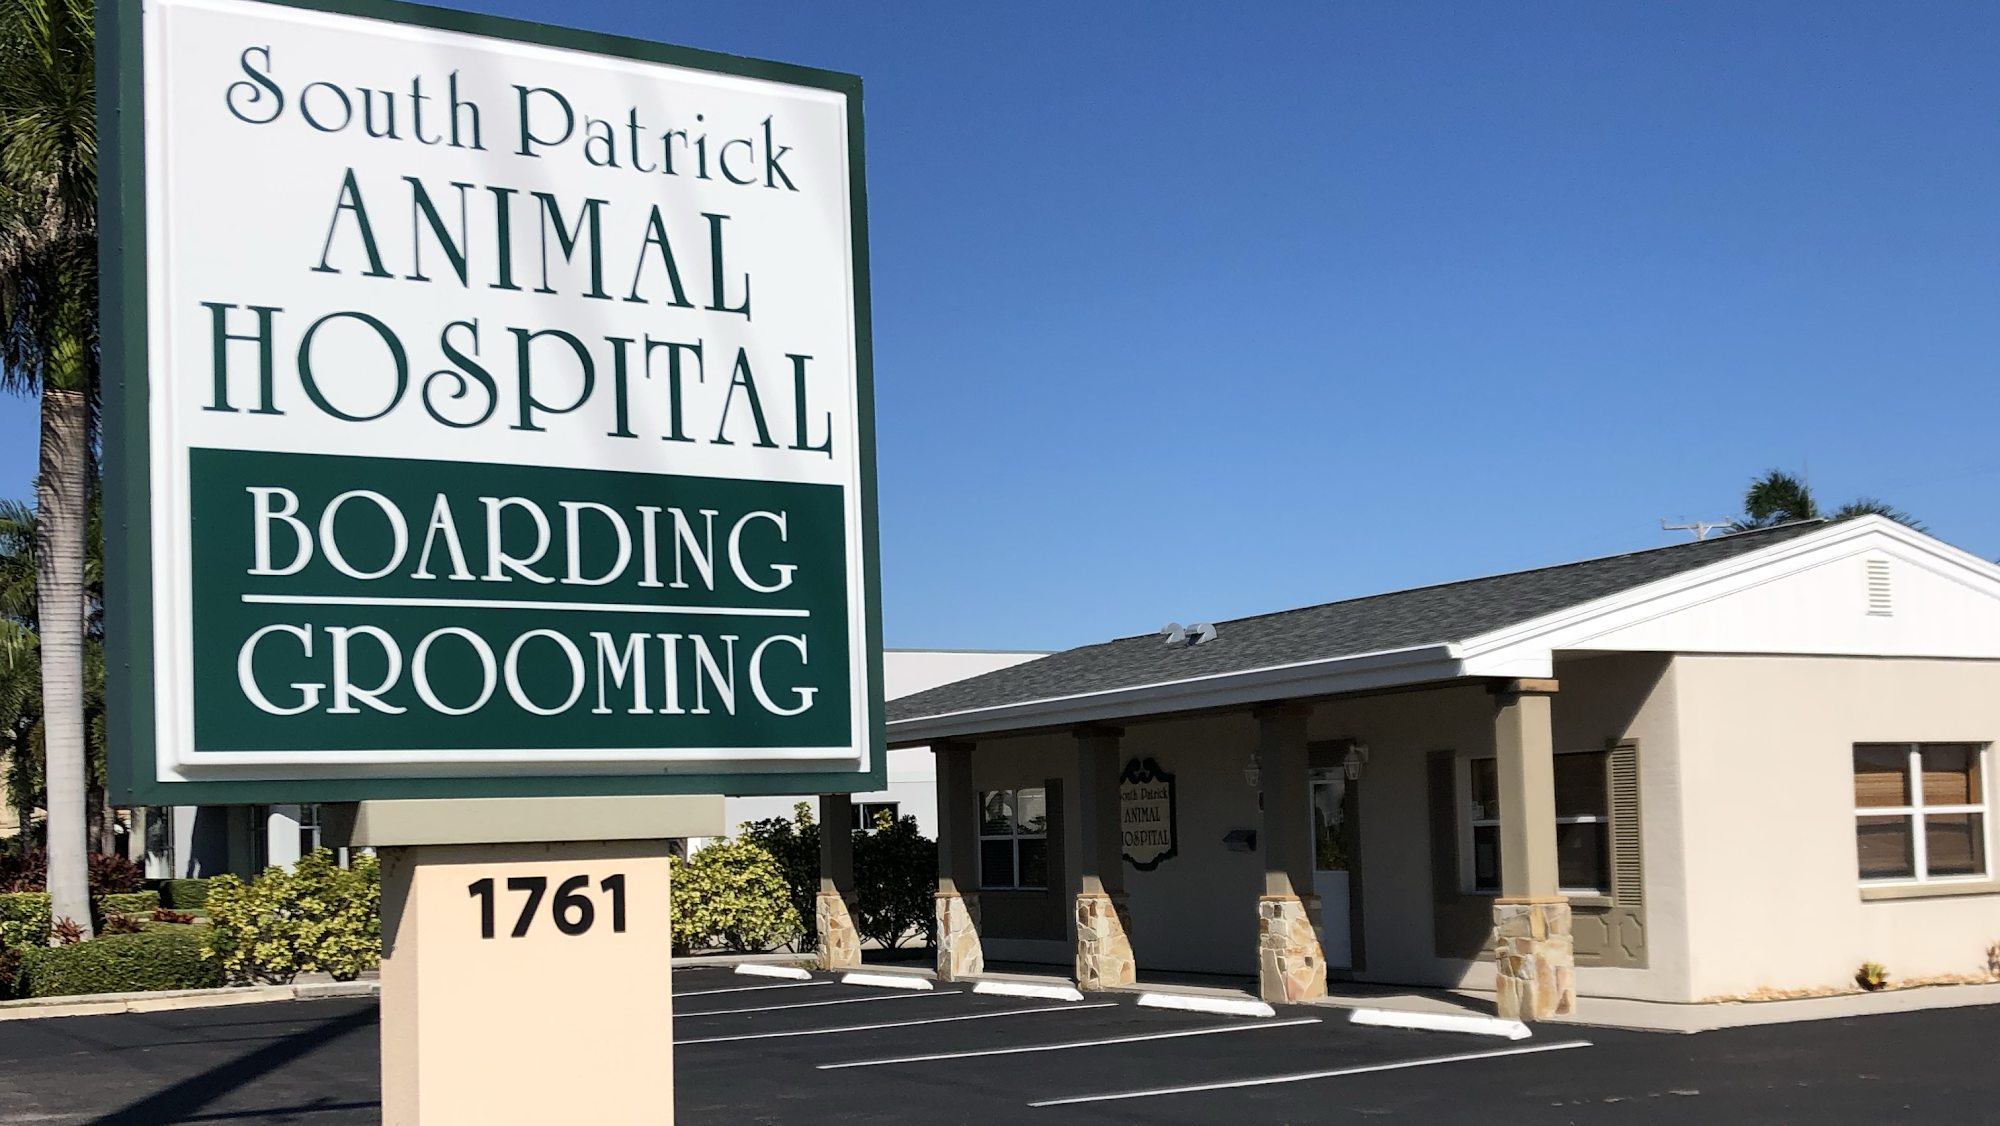 South Patrick Animal Hospital